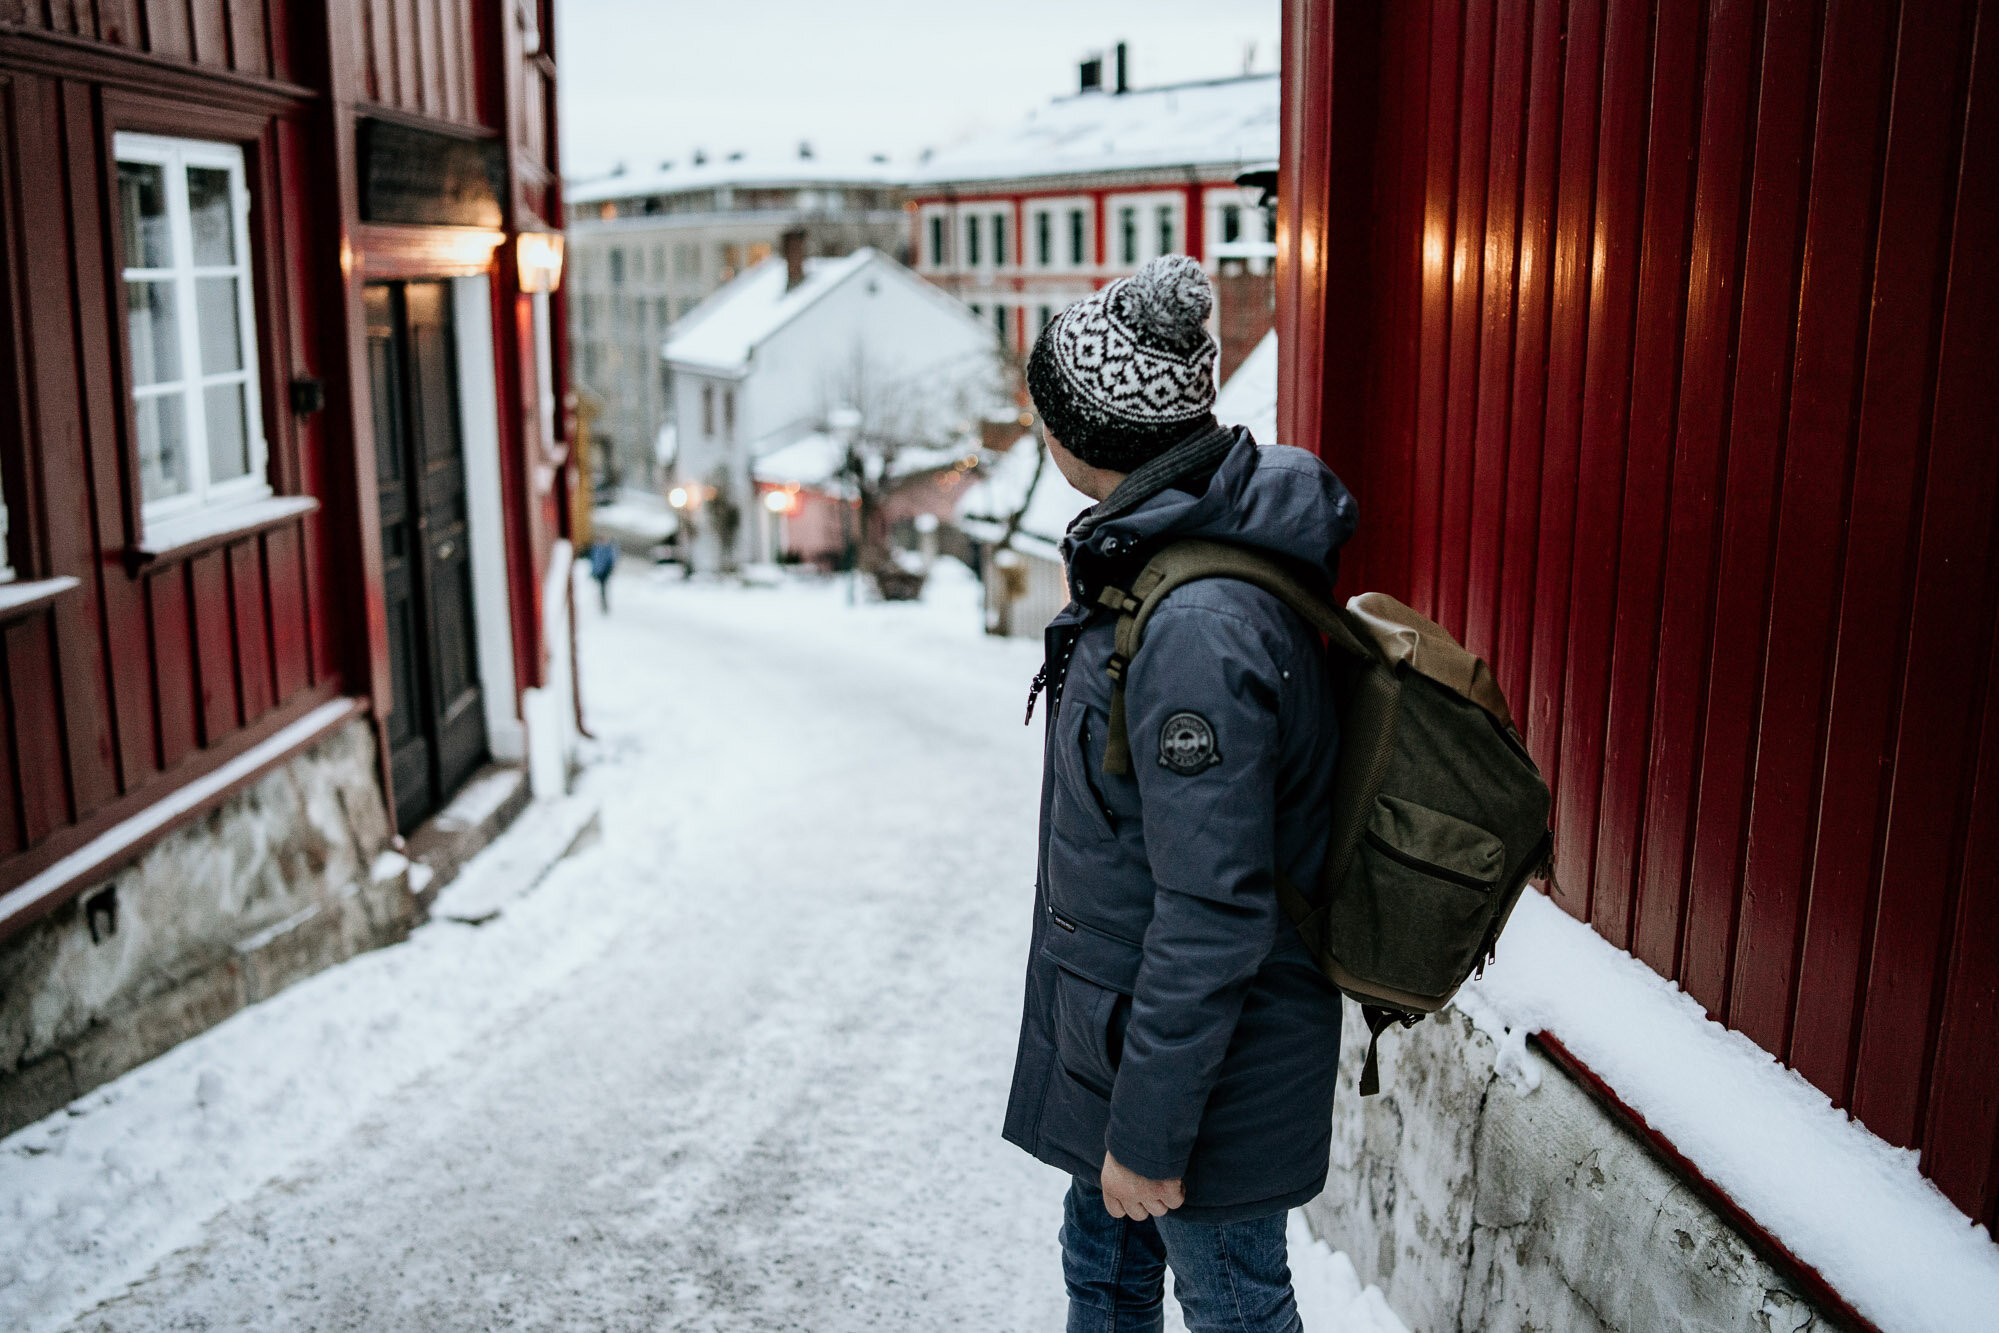 Explore Oslo's hidden streets